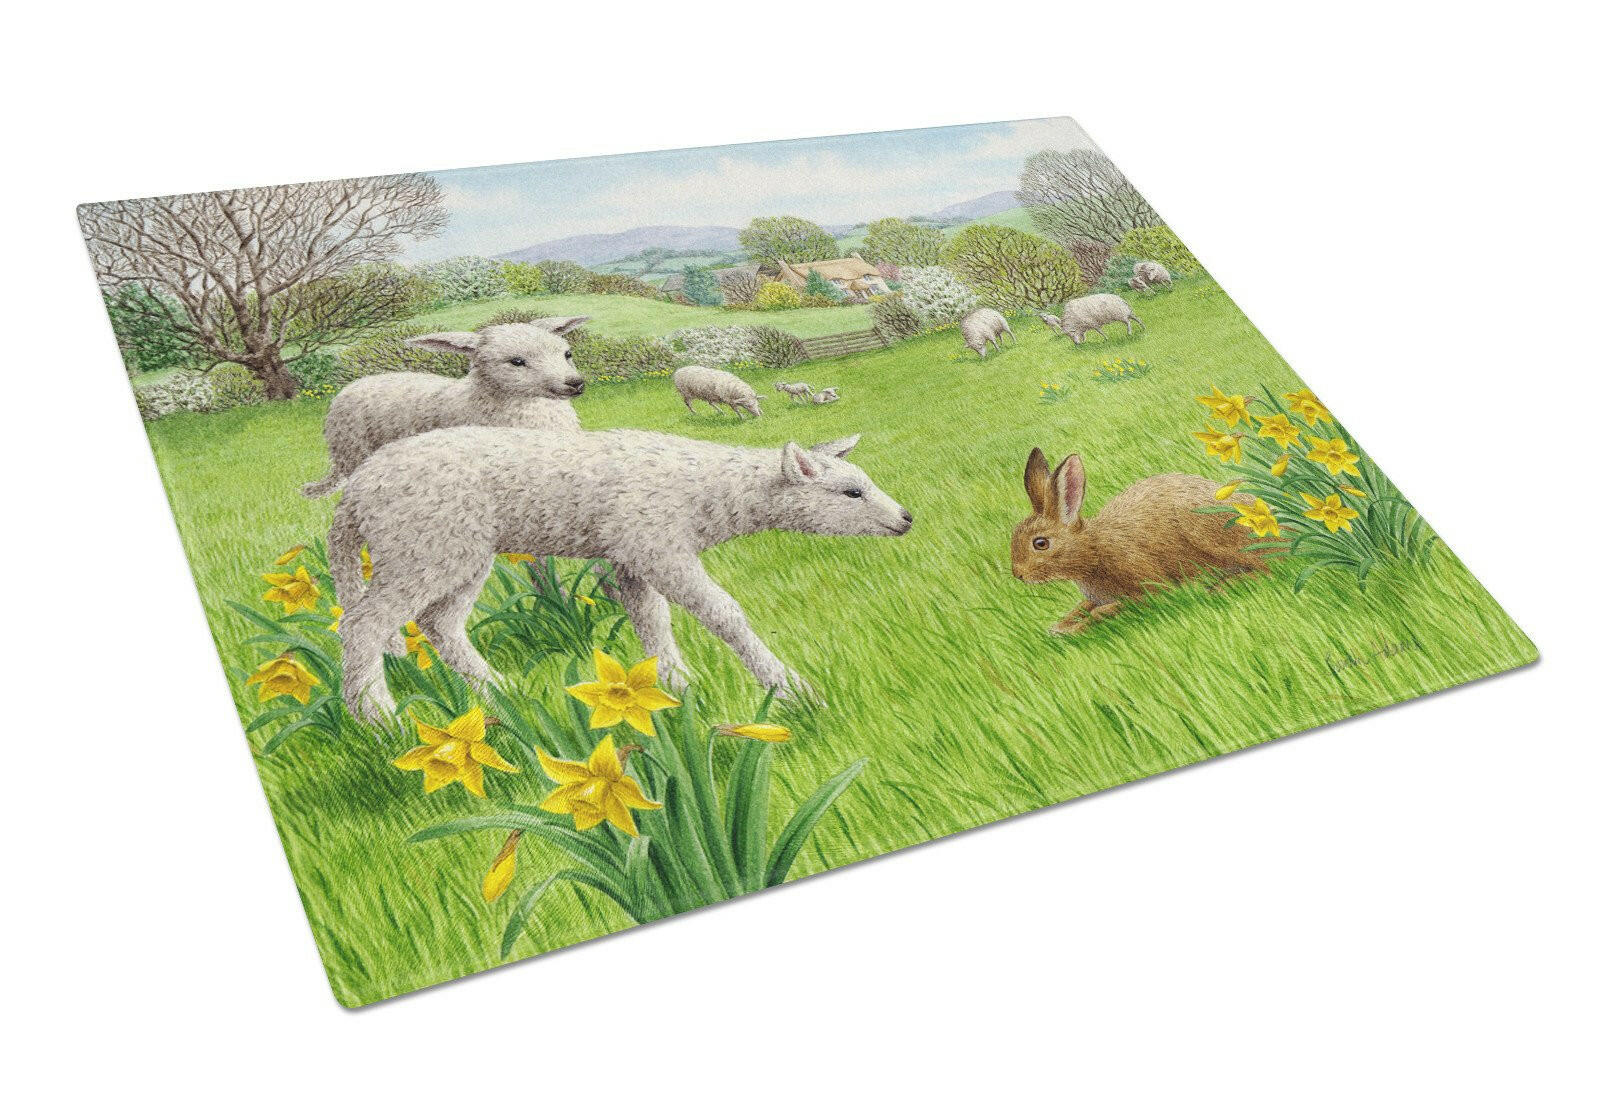 Lambs, Sheep and Rabbit Hare Glass Cutting Board Large ASA2179LCB by Caroline's Treasures